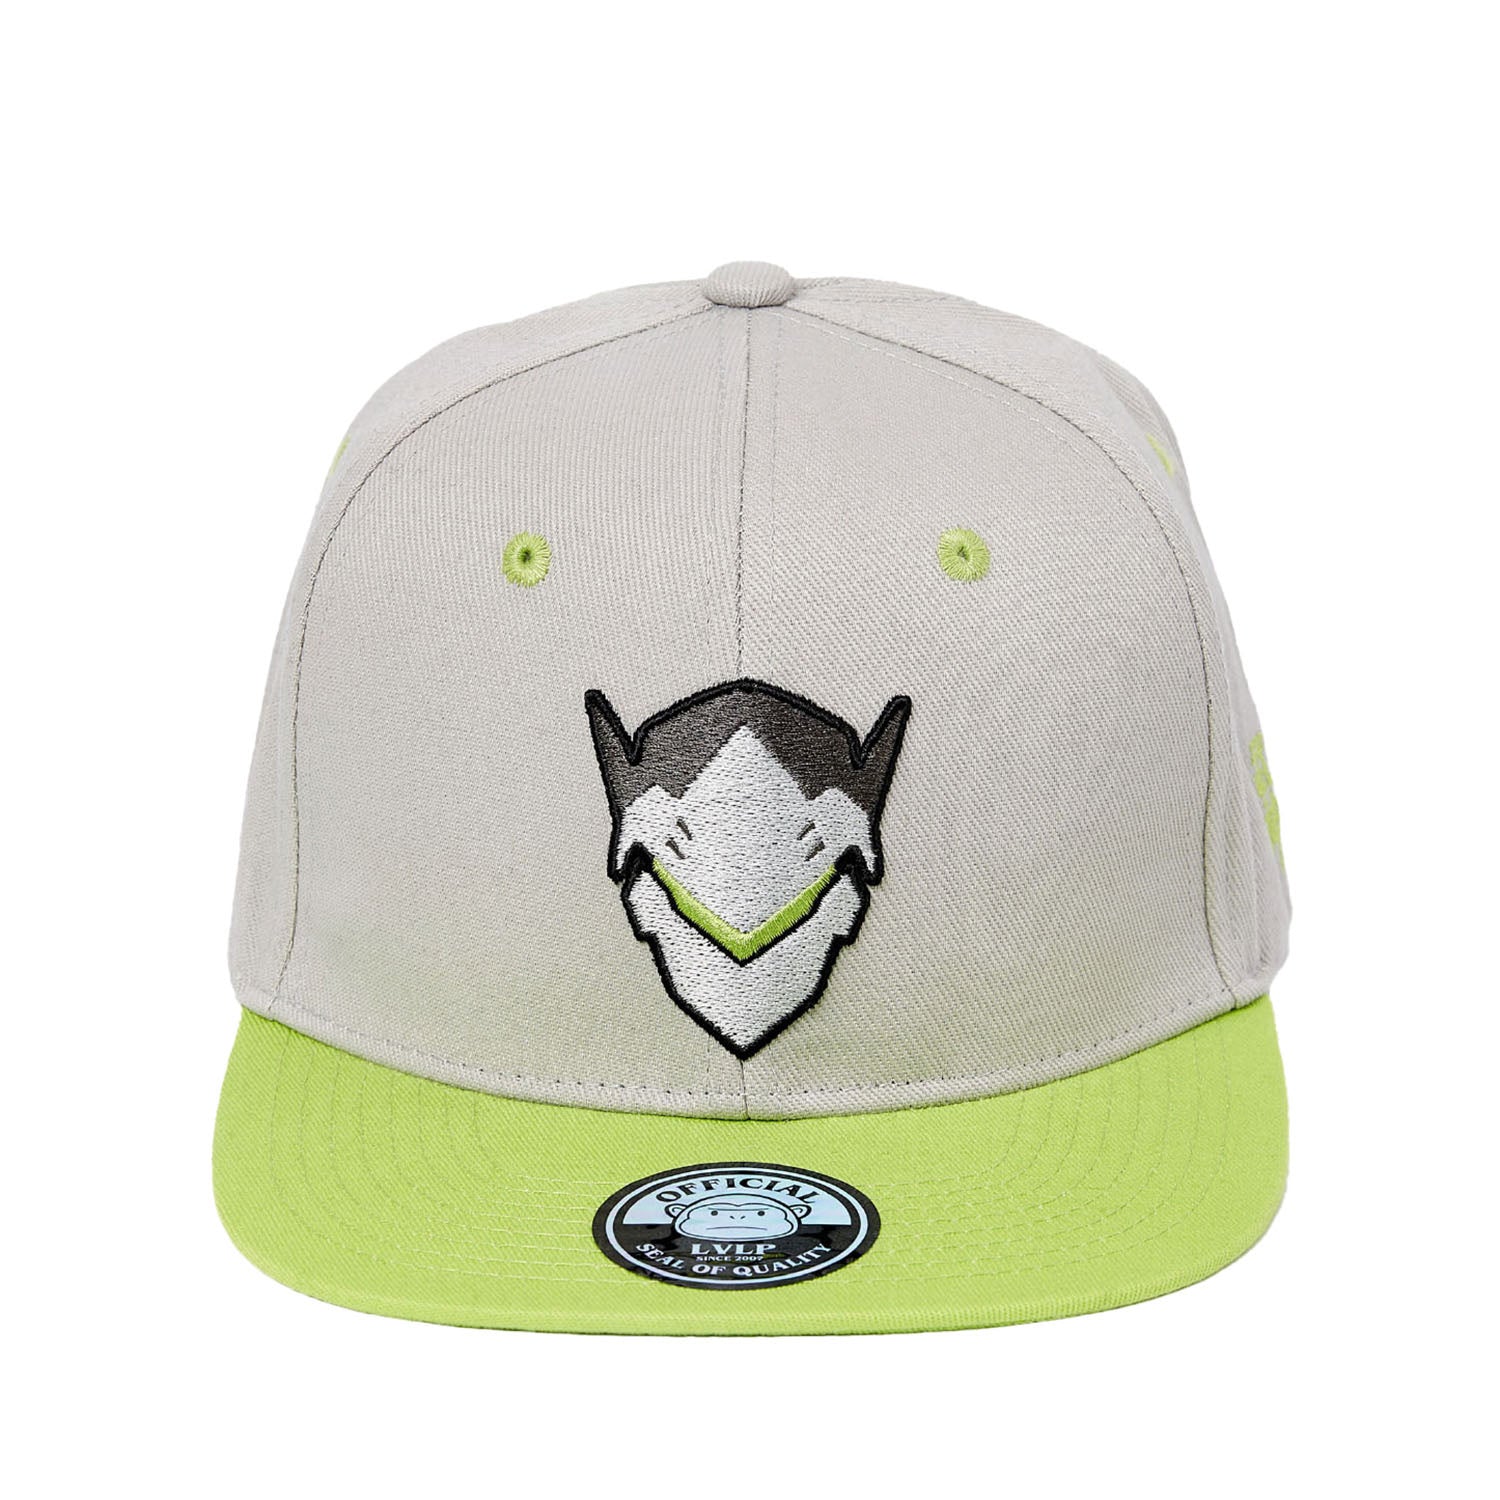 Overwatch Genji Grey Flatbill Snapback Hat - Front View